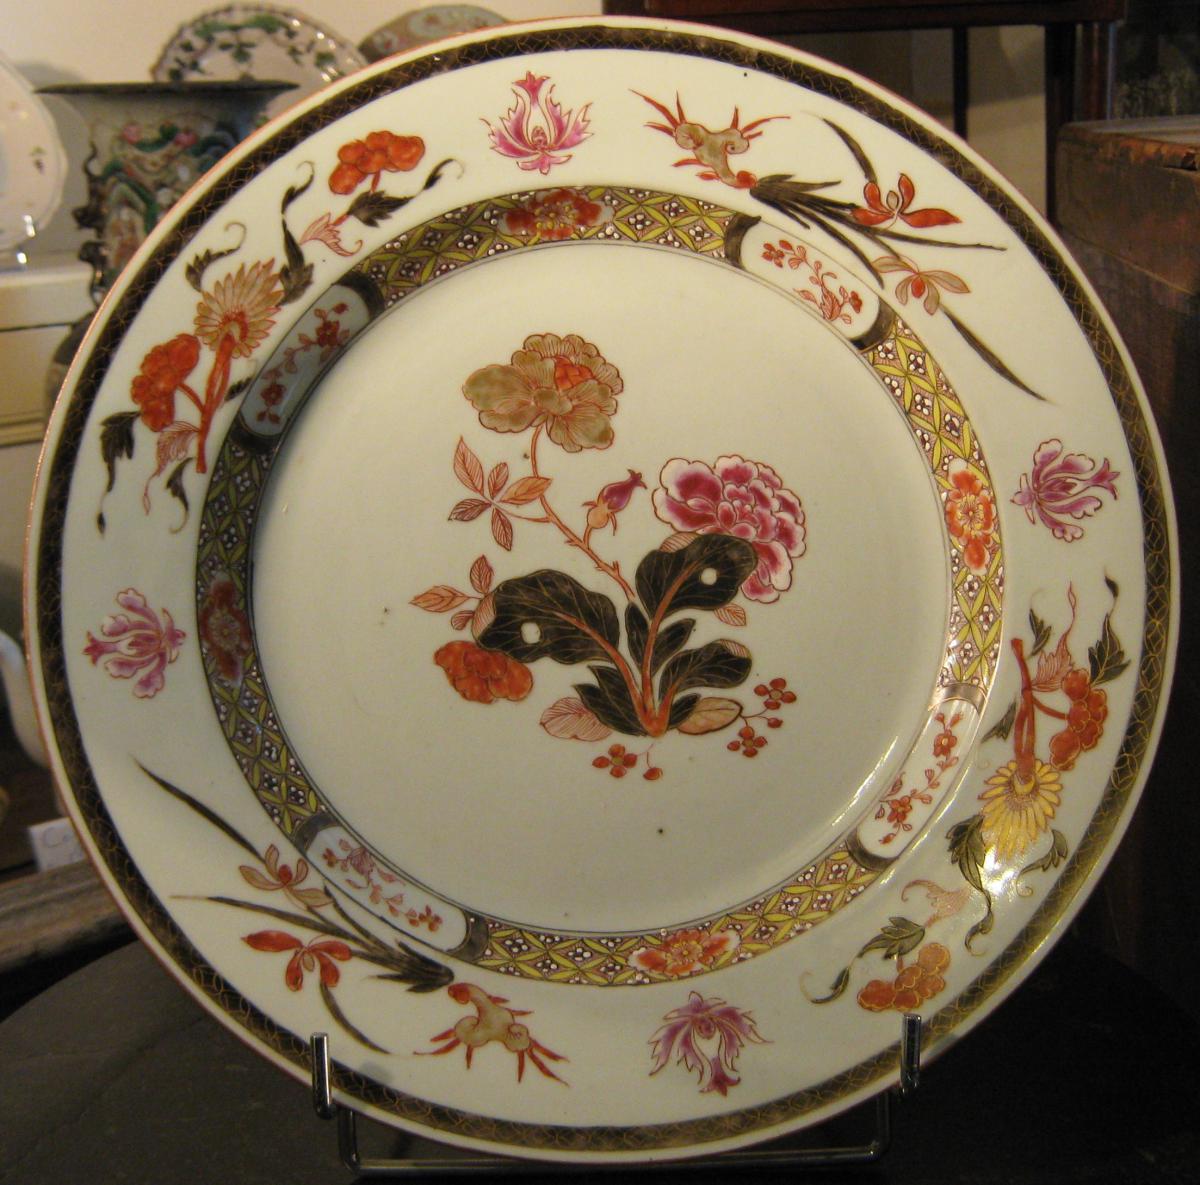 The Dish Porcelain India Company, Qianlong Period, XVIII Century.